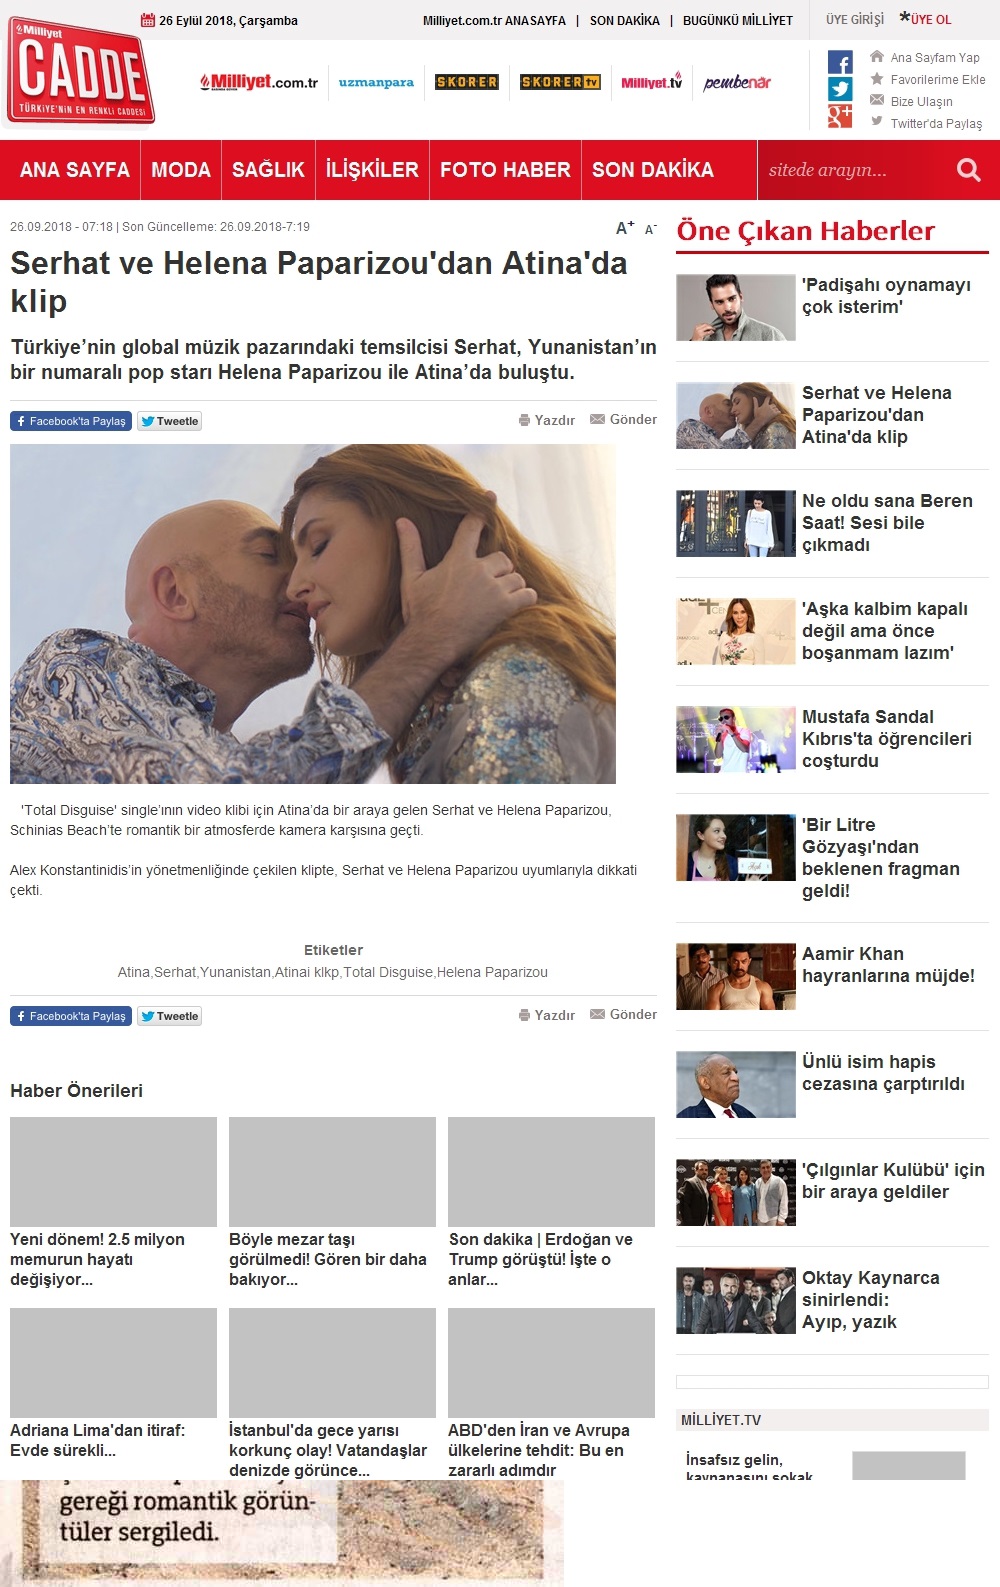 Serhat ve Helena Paparizou'dan Atina'da Klip - 26.09.2018 - milliyet.com.tr